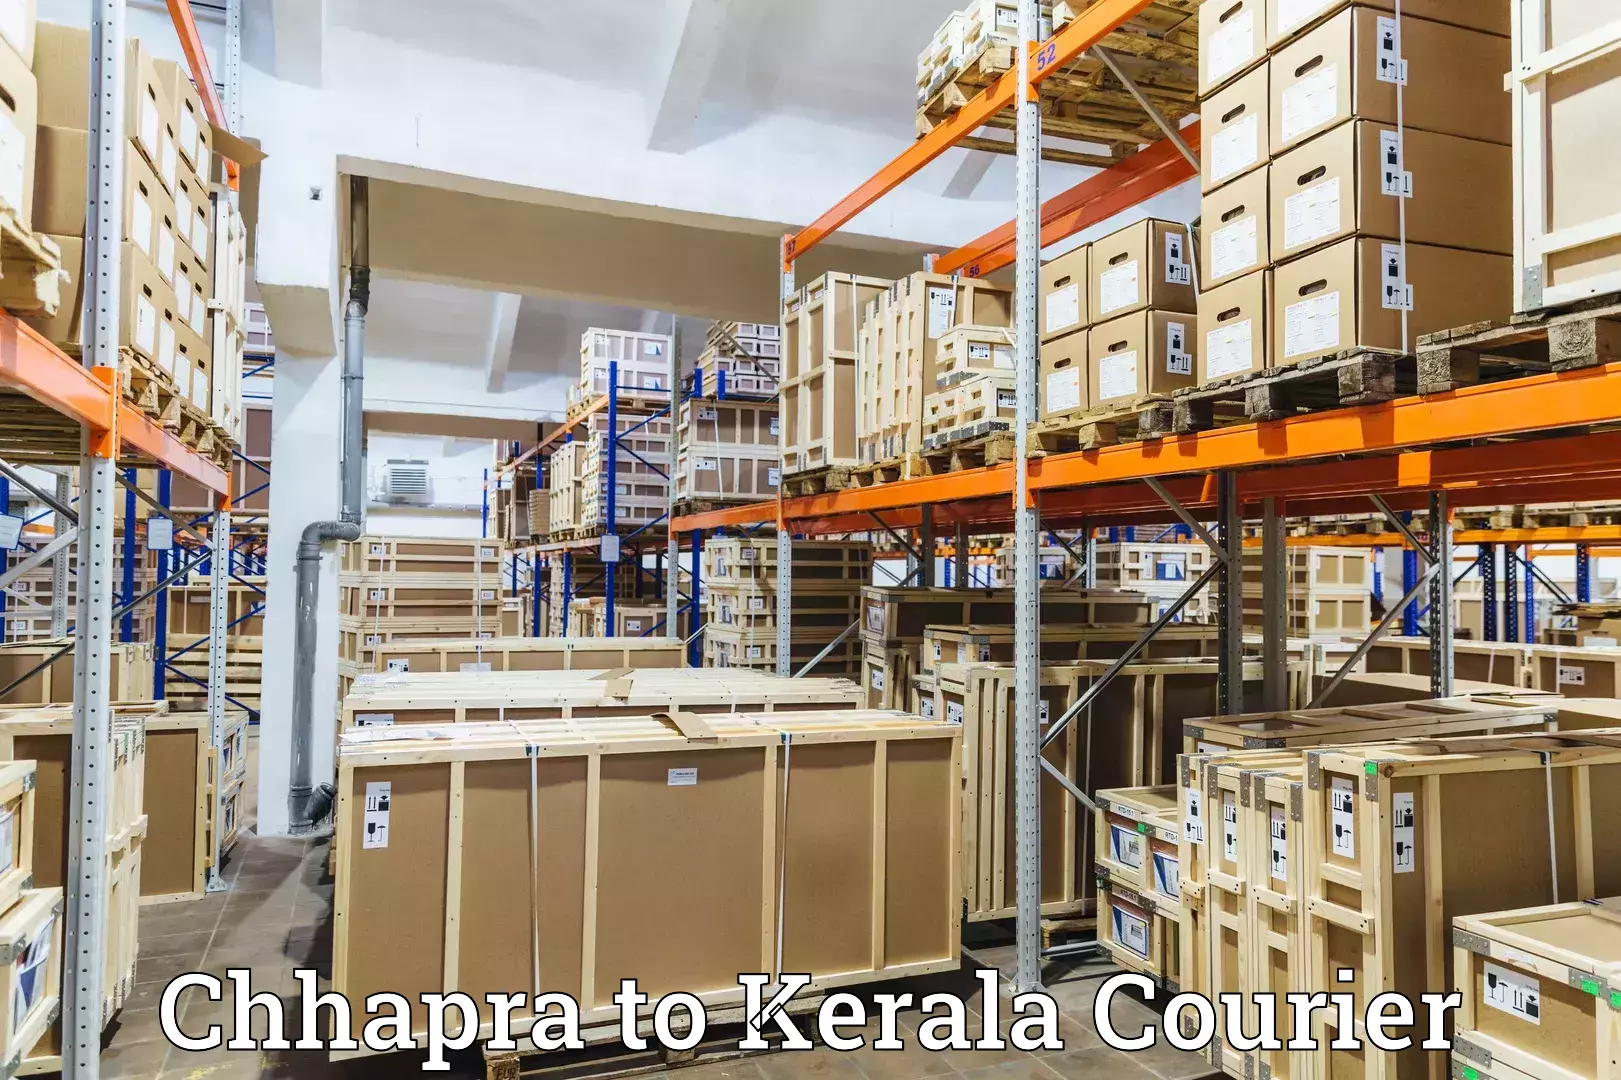 Express delivery capabilities Chhapra to Cochin Port Kochi